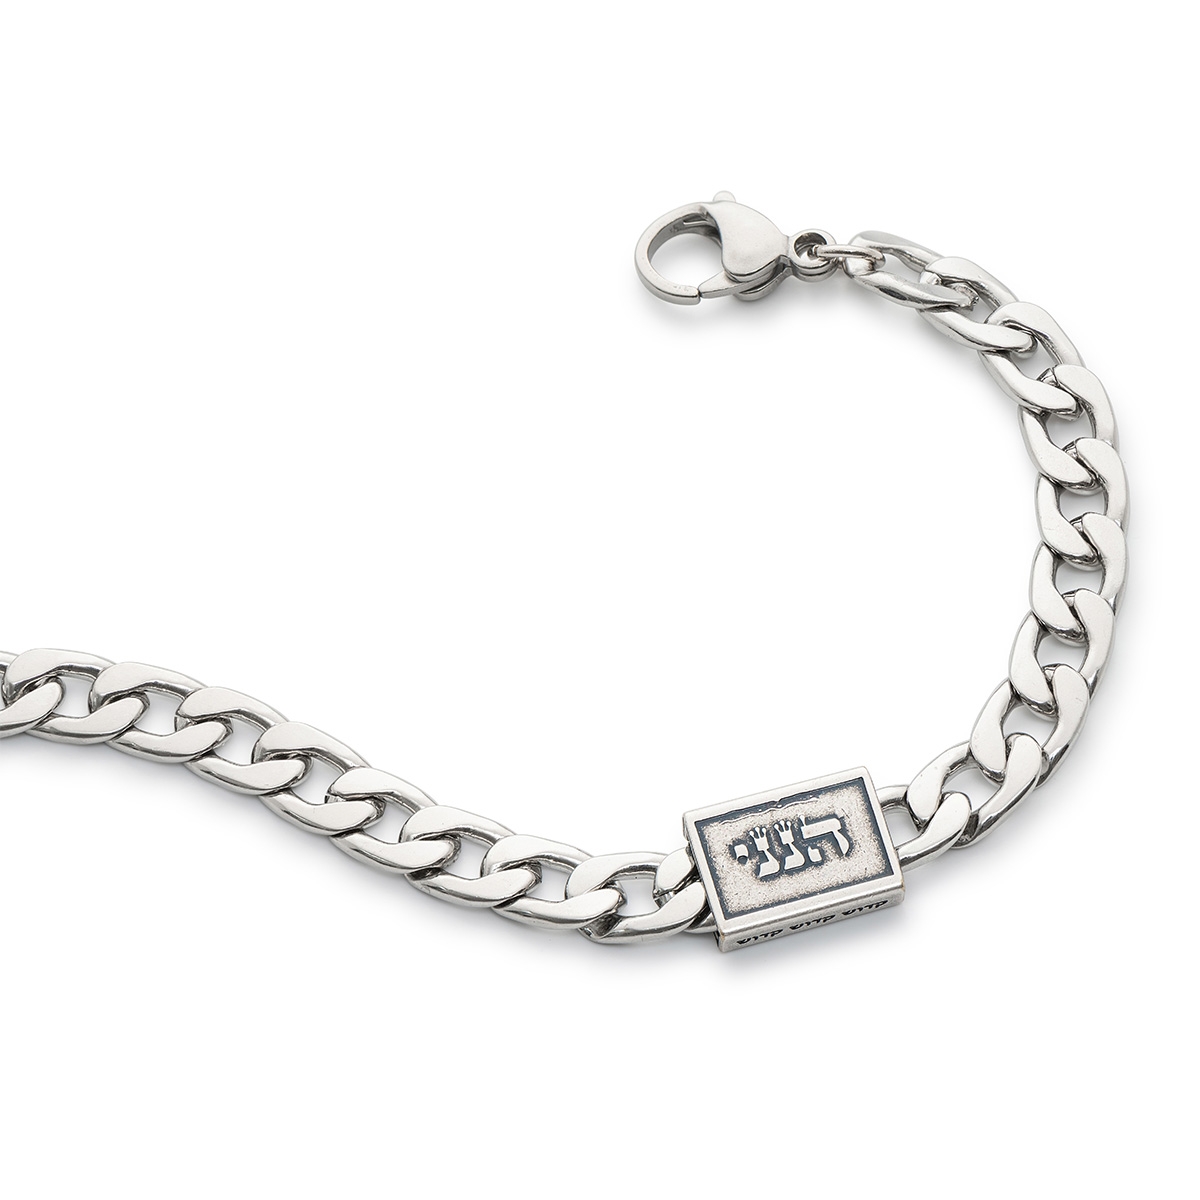 Unisex Stainless Steel Chain Bracelet with Hineni and Kedushah - 1